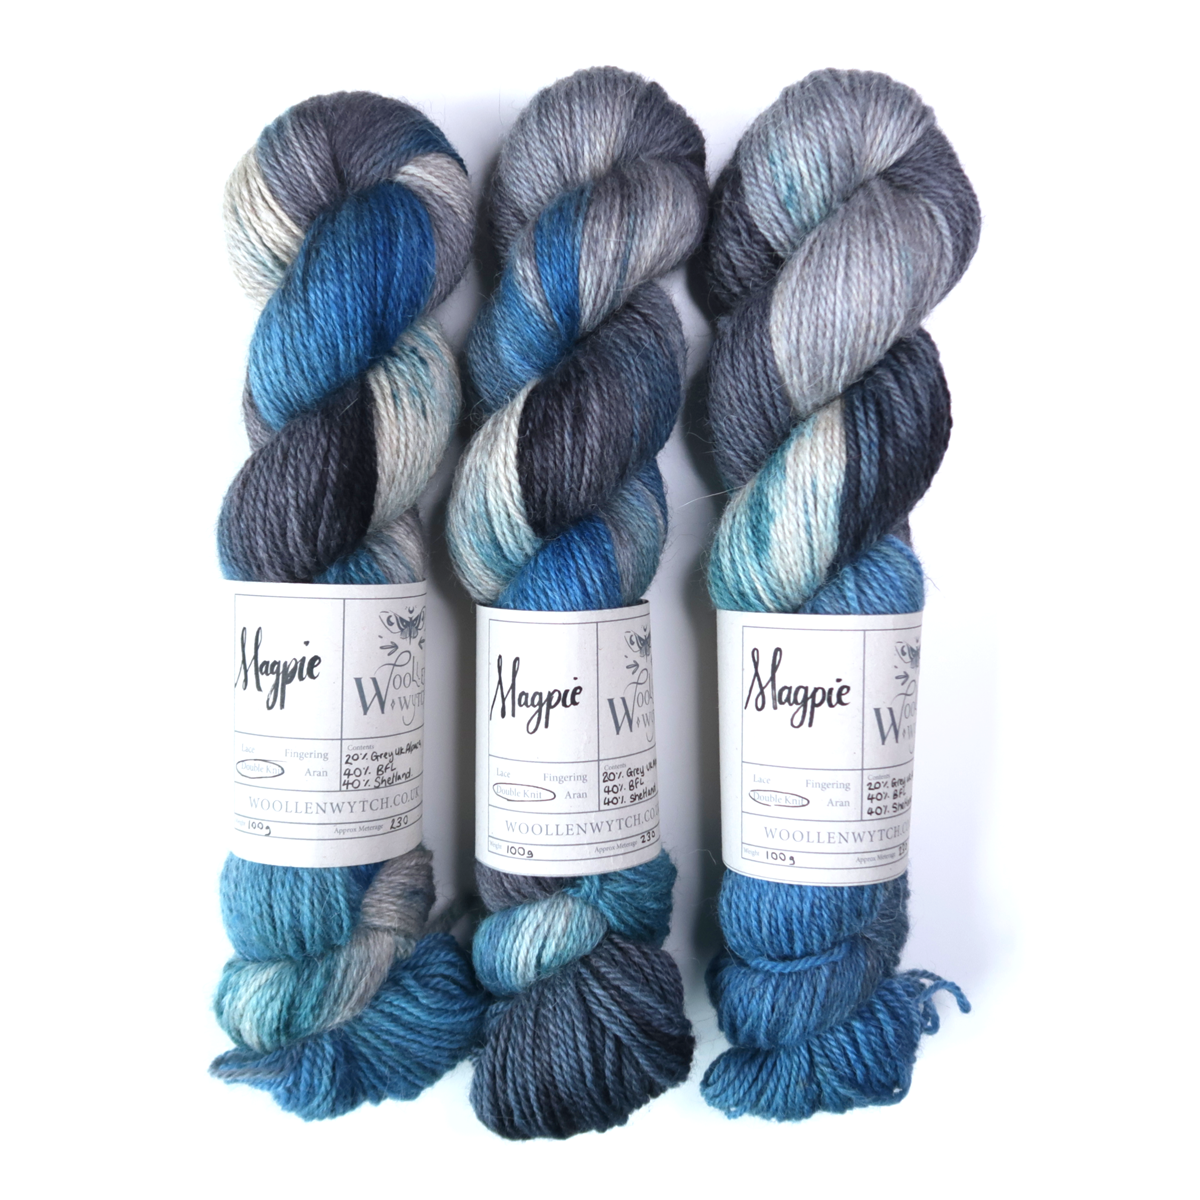 Magpie blue and black hand dyed sheltand yarn, british yarn woollen wytch bristol